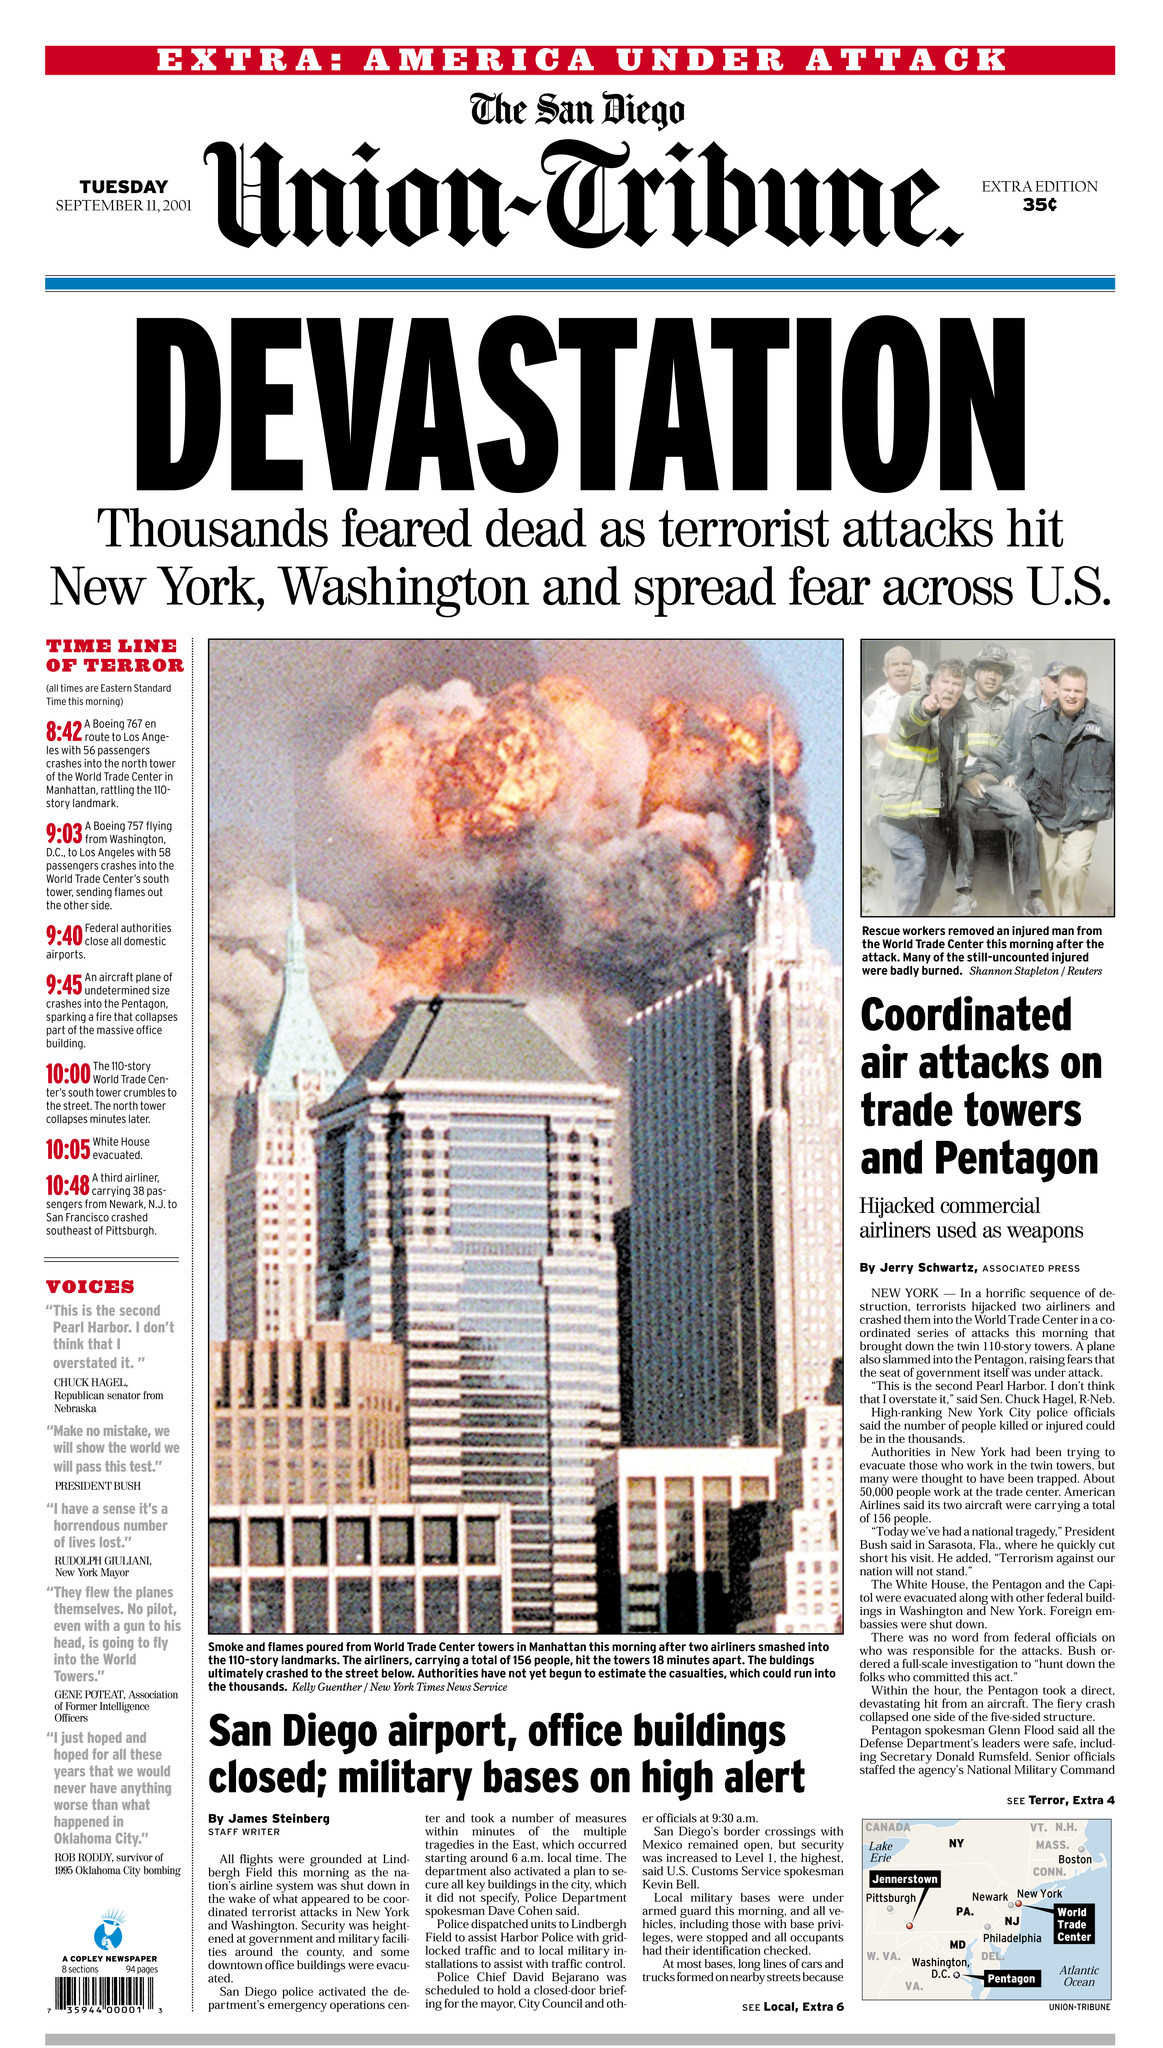 September 11, 2001 Terrorist attacks hit U.S. The San Diego Union